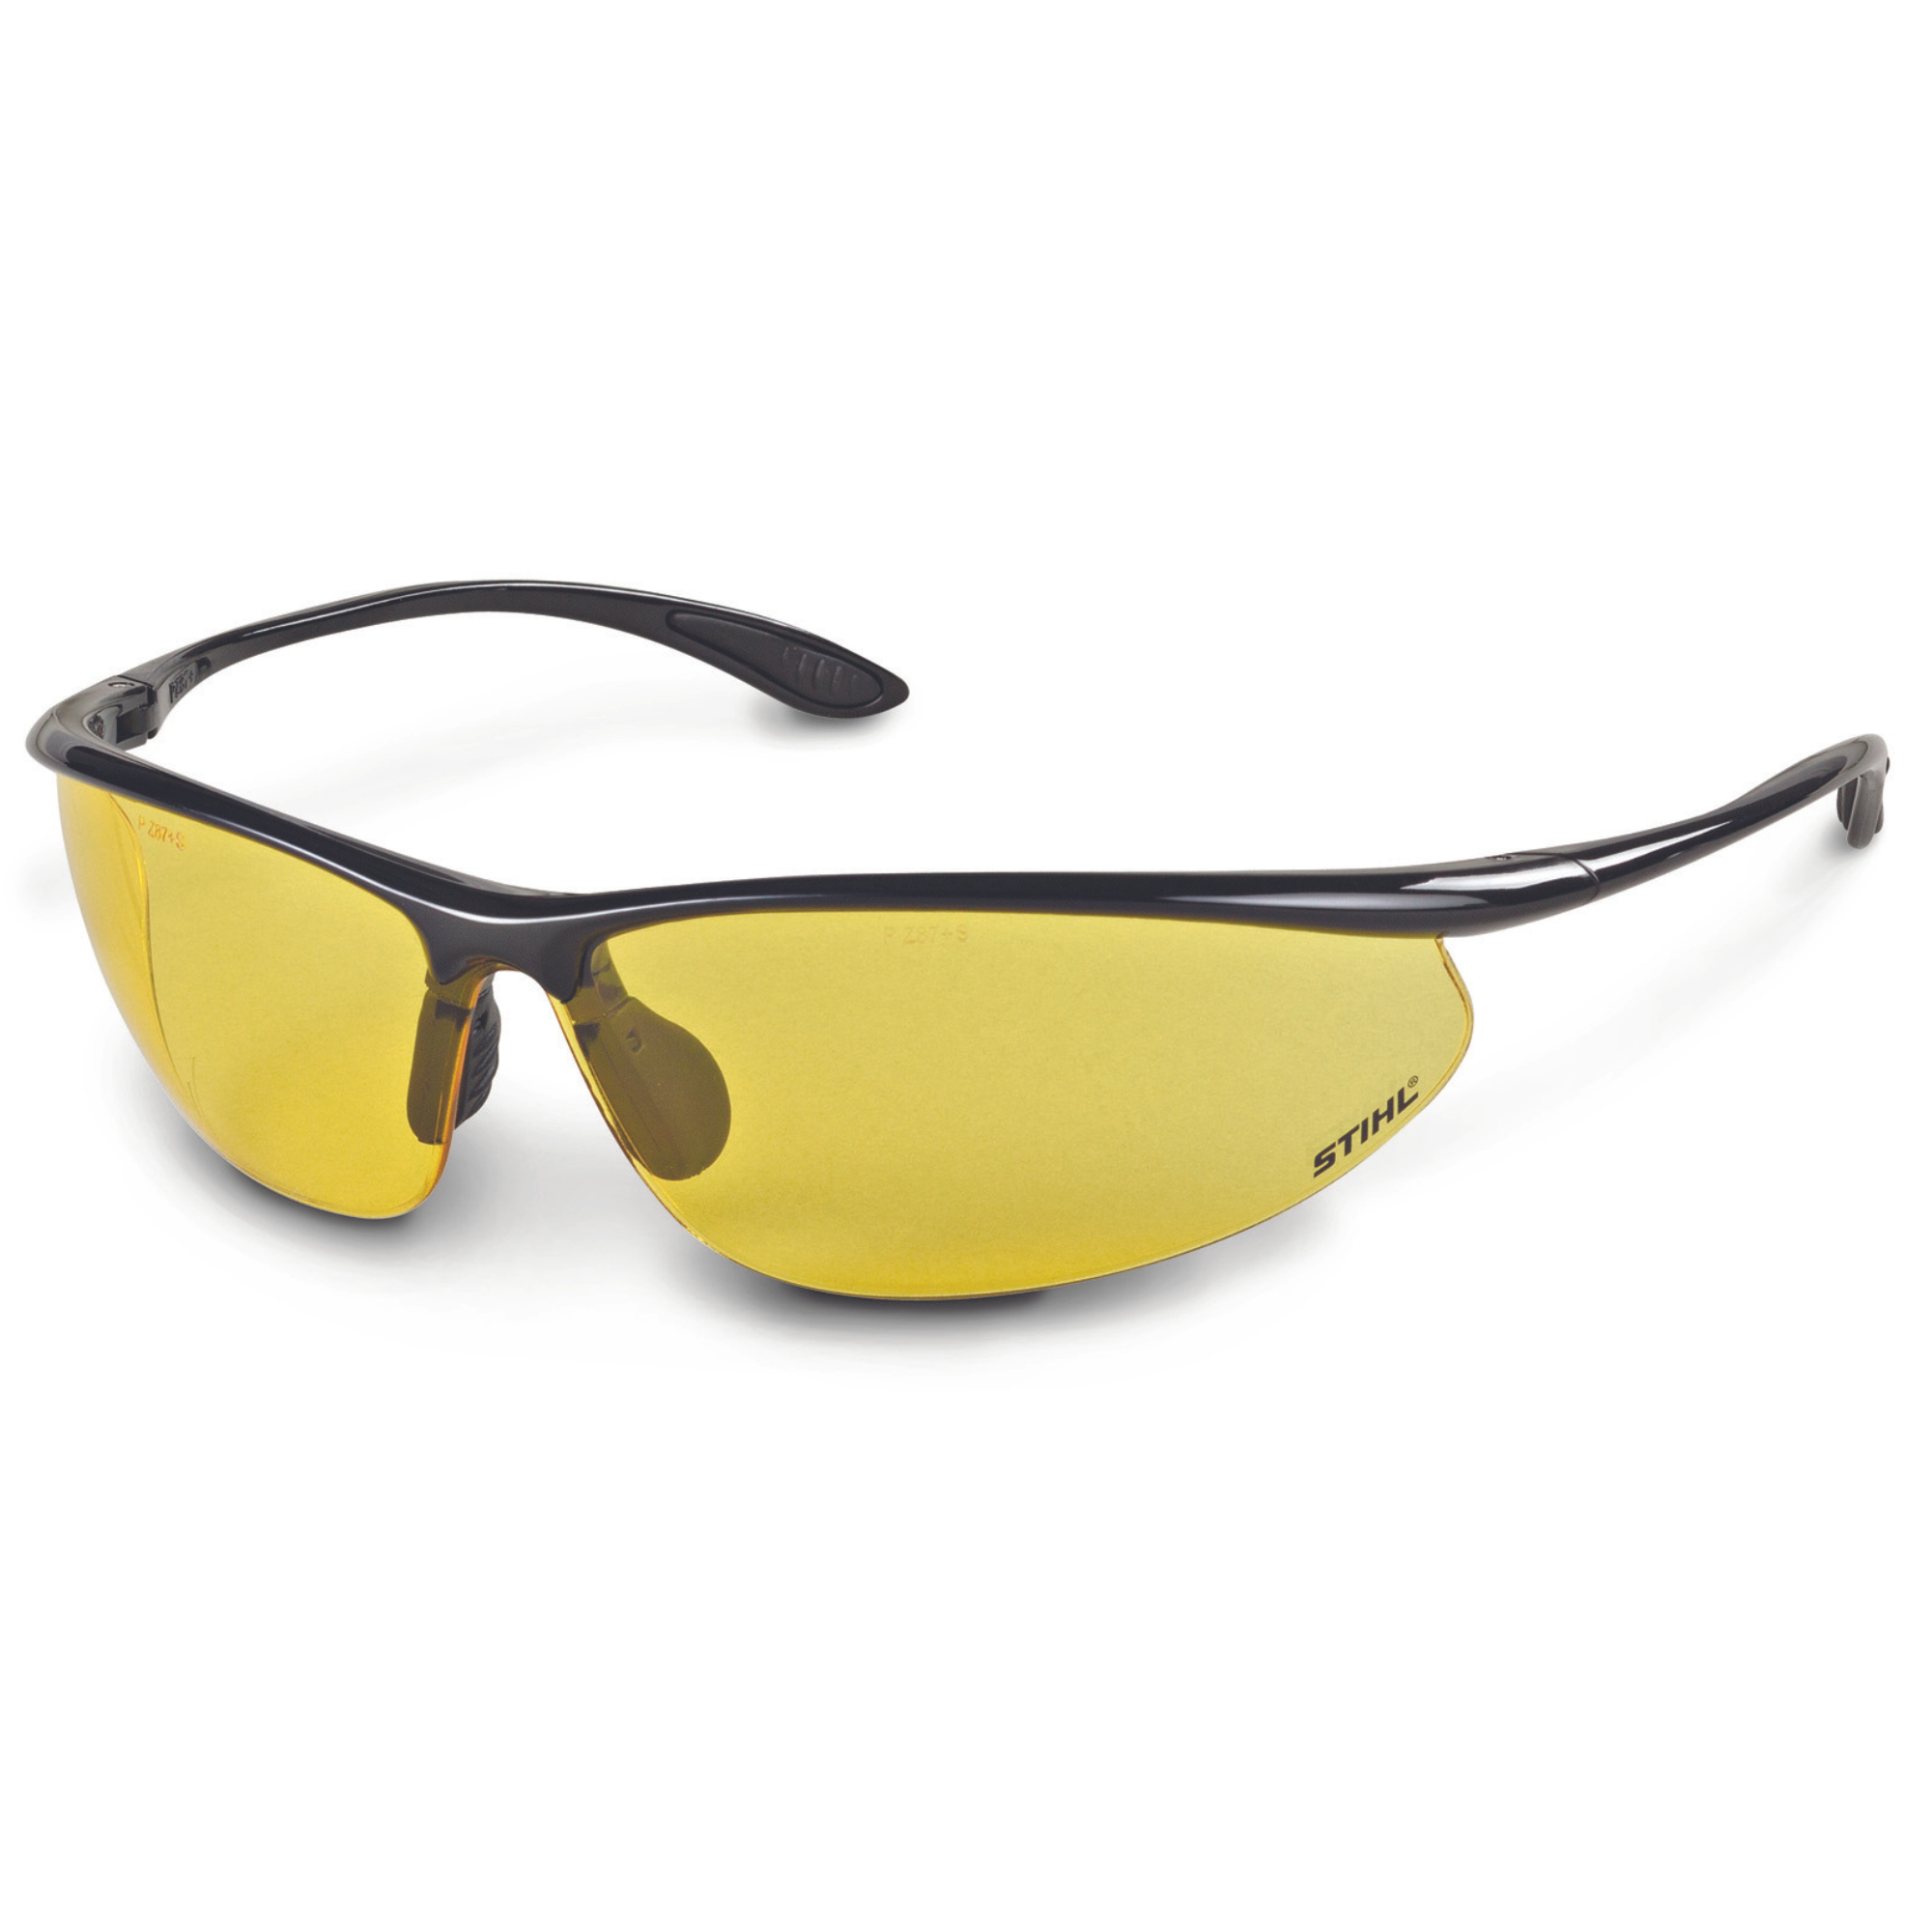 Stihl Sleek Line Glasses | Yellow Lens | 7010 884 0333